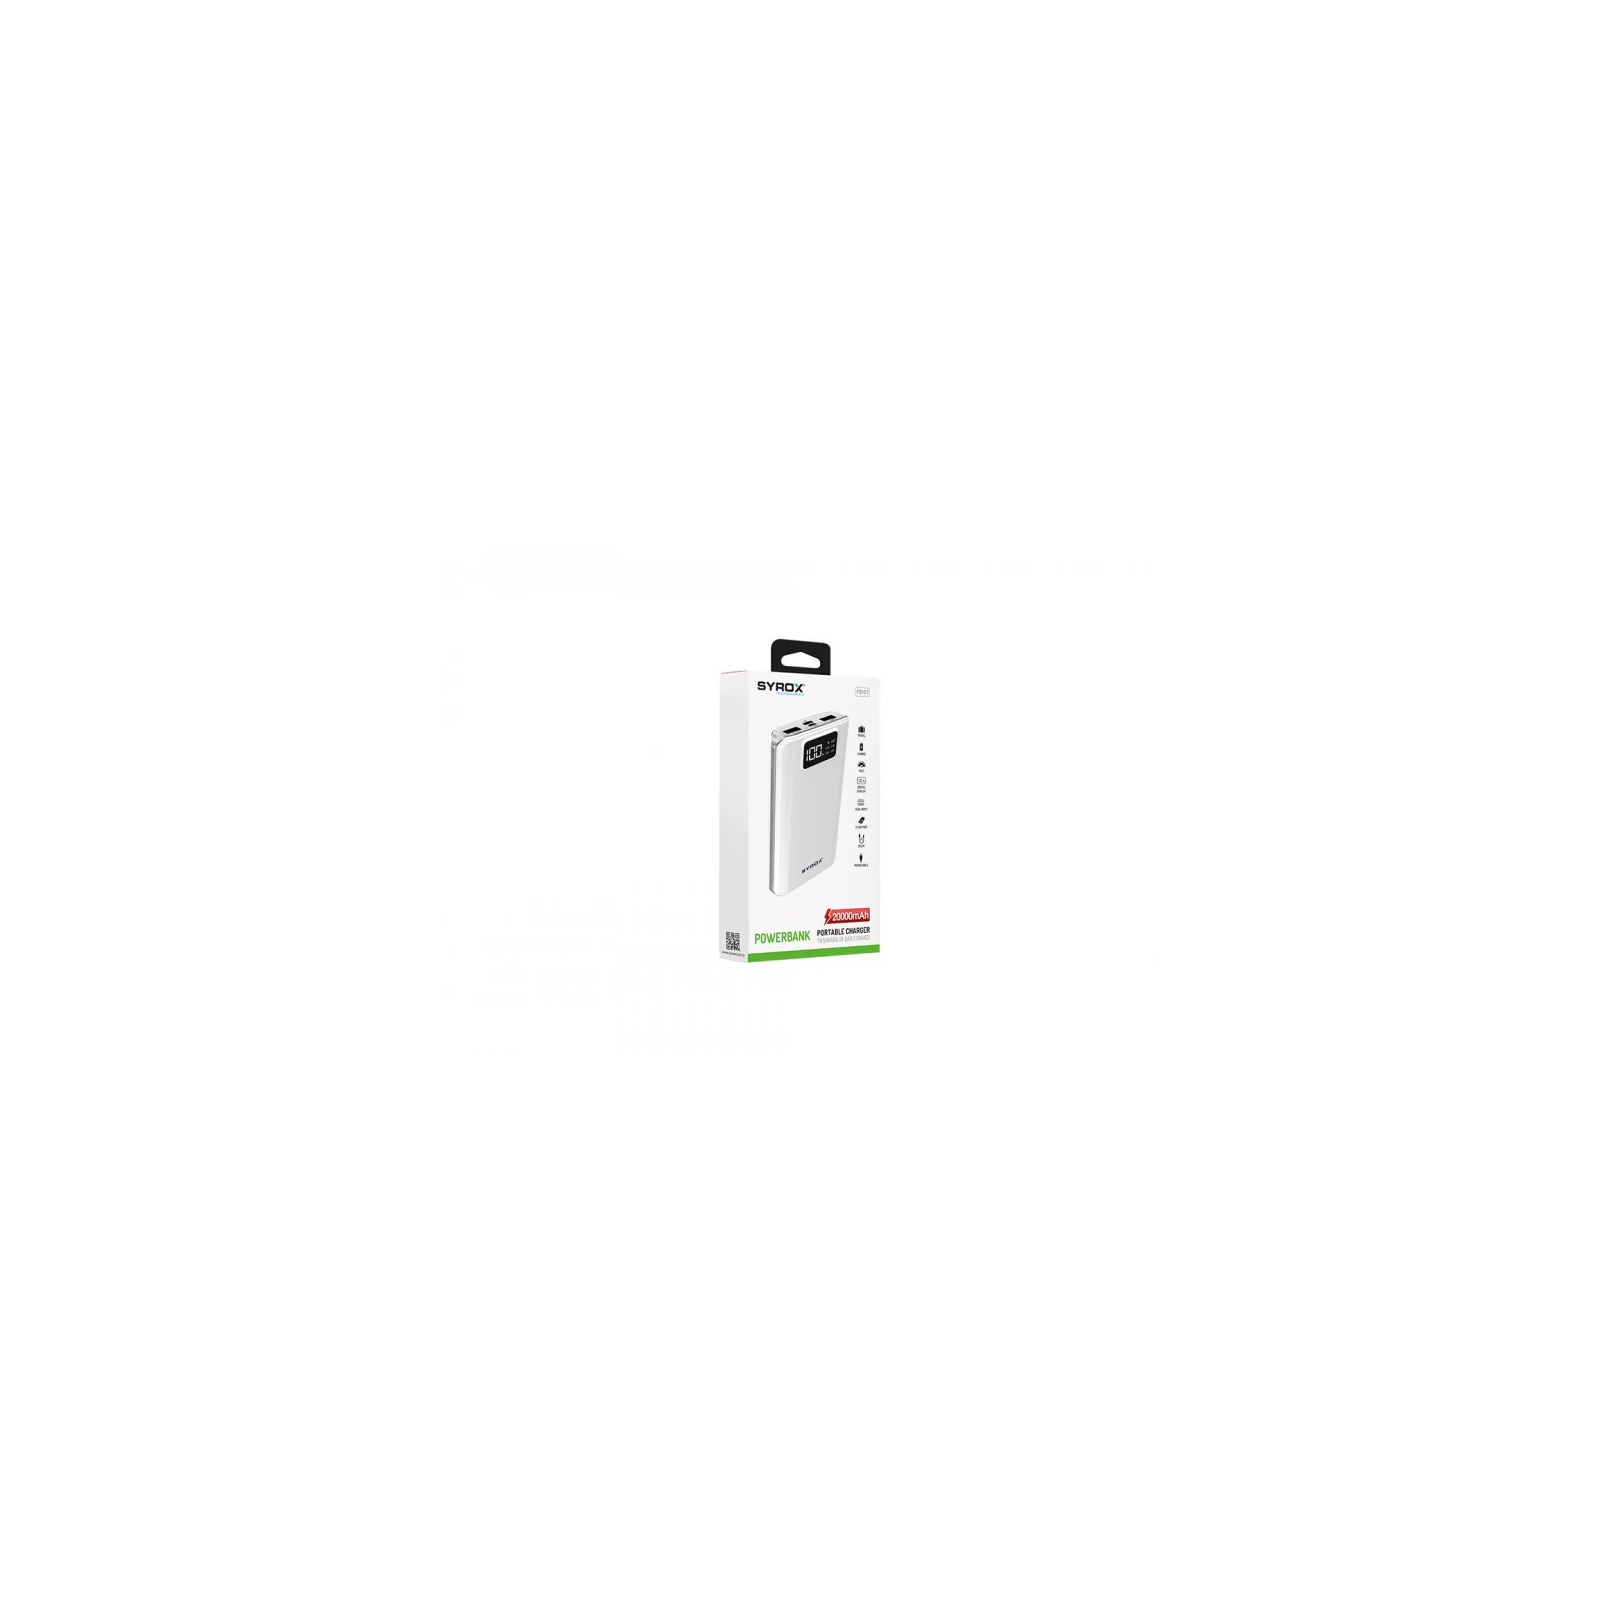 Батарея универсальная Syrox PB107 20000mAh, USB*2, Micro USB, Type C, white (PB107_white) изображение 4